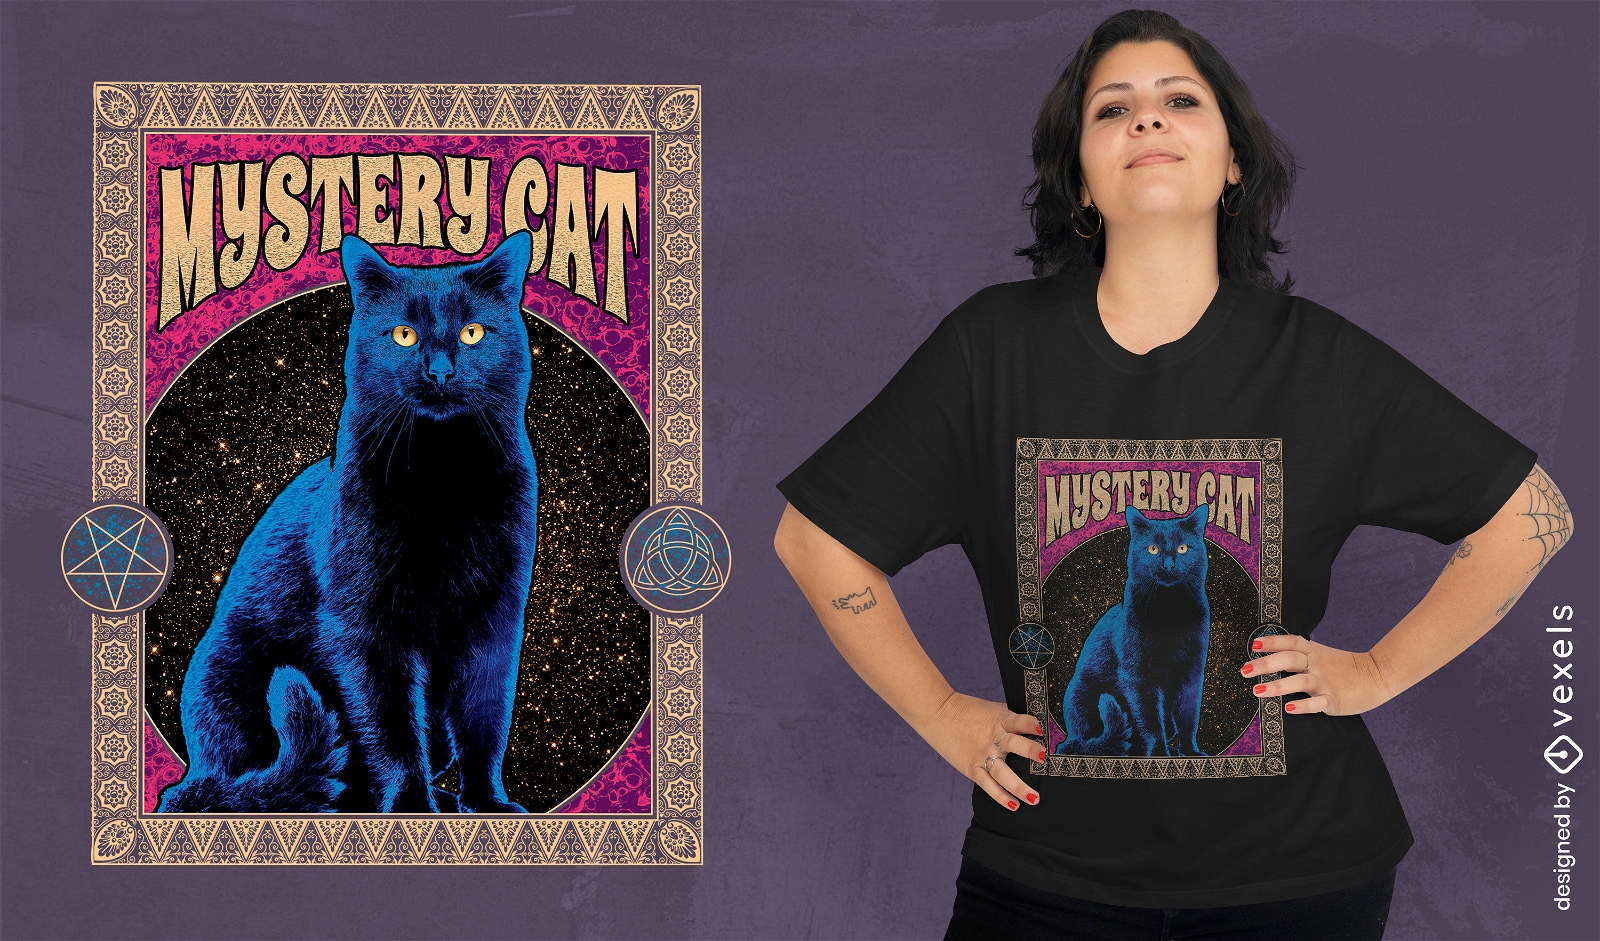 Diseño de camiseta PSD de misterio de gato negro